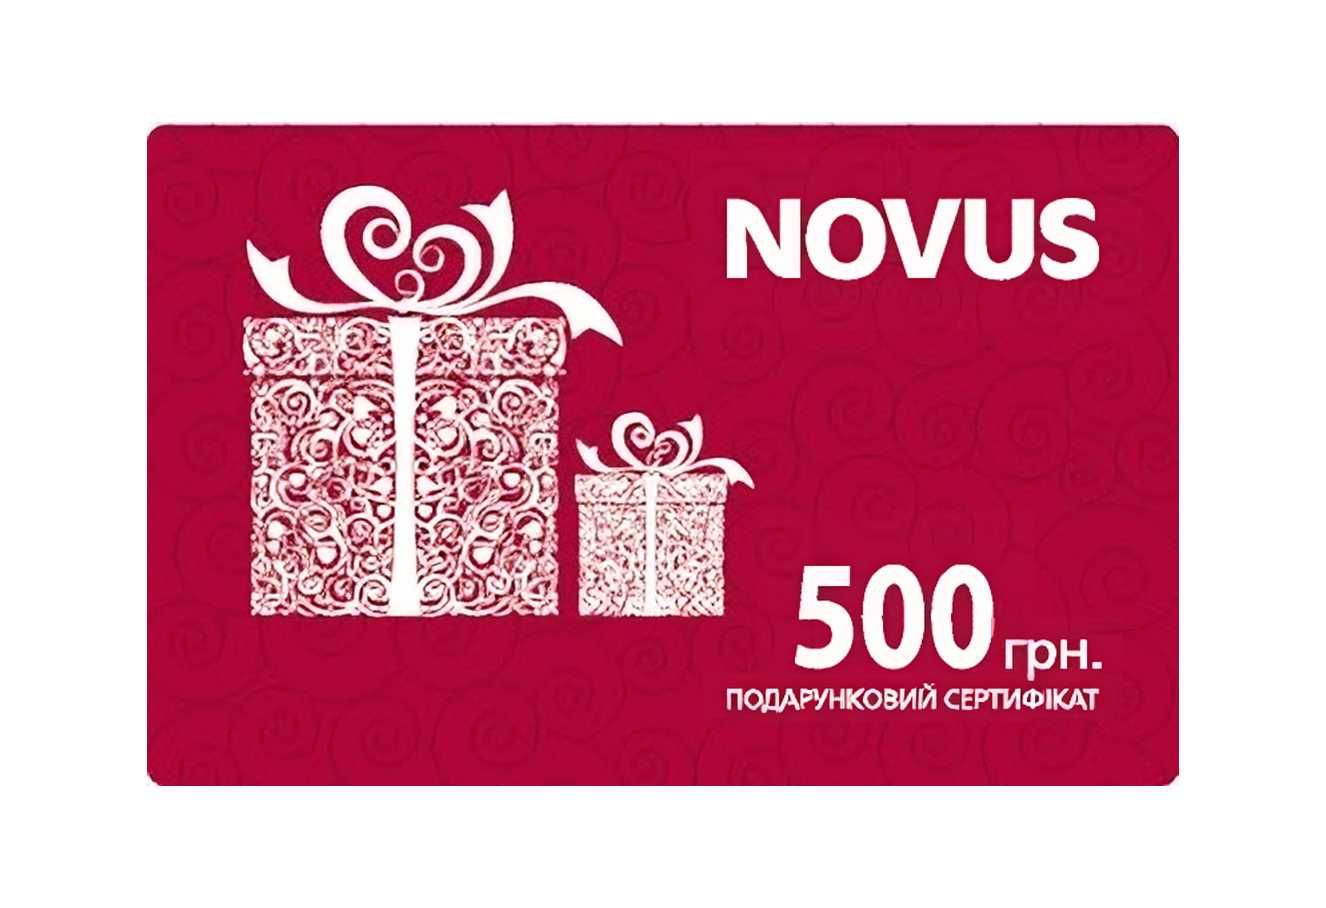 Сертифікат Novus 500 за 299 грн (Супермаркет)